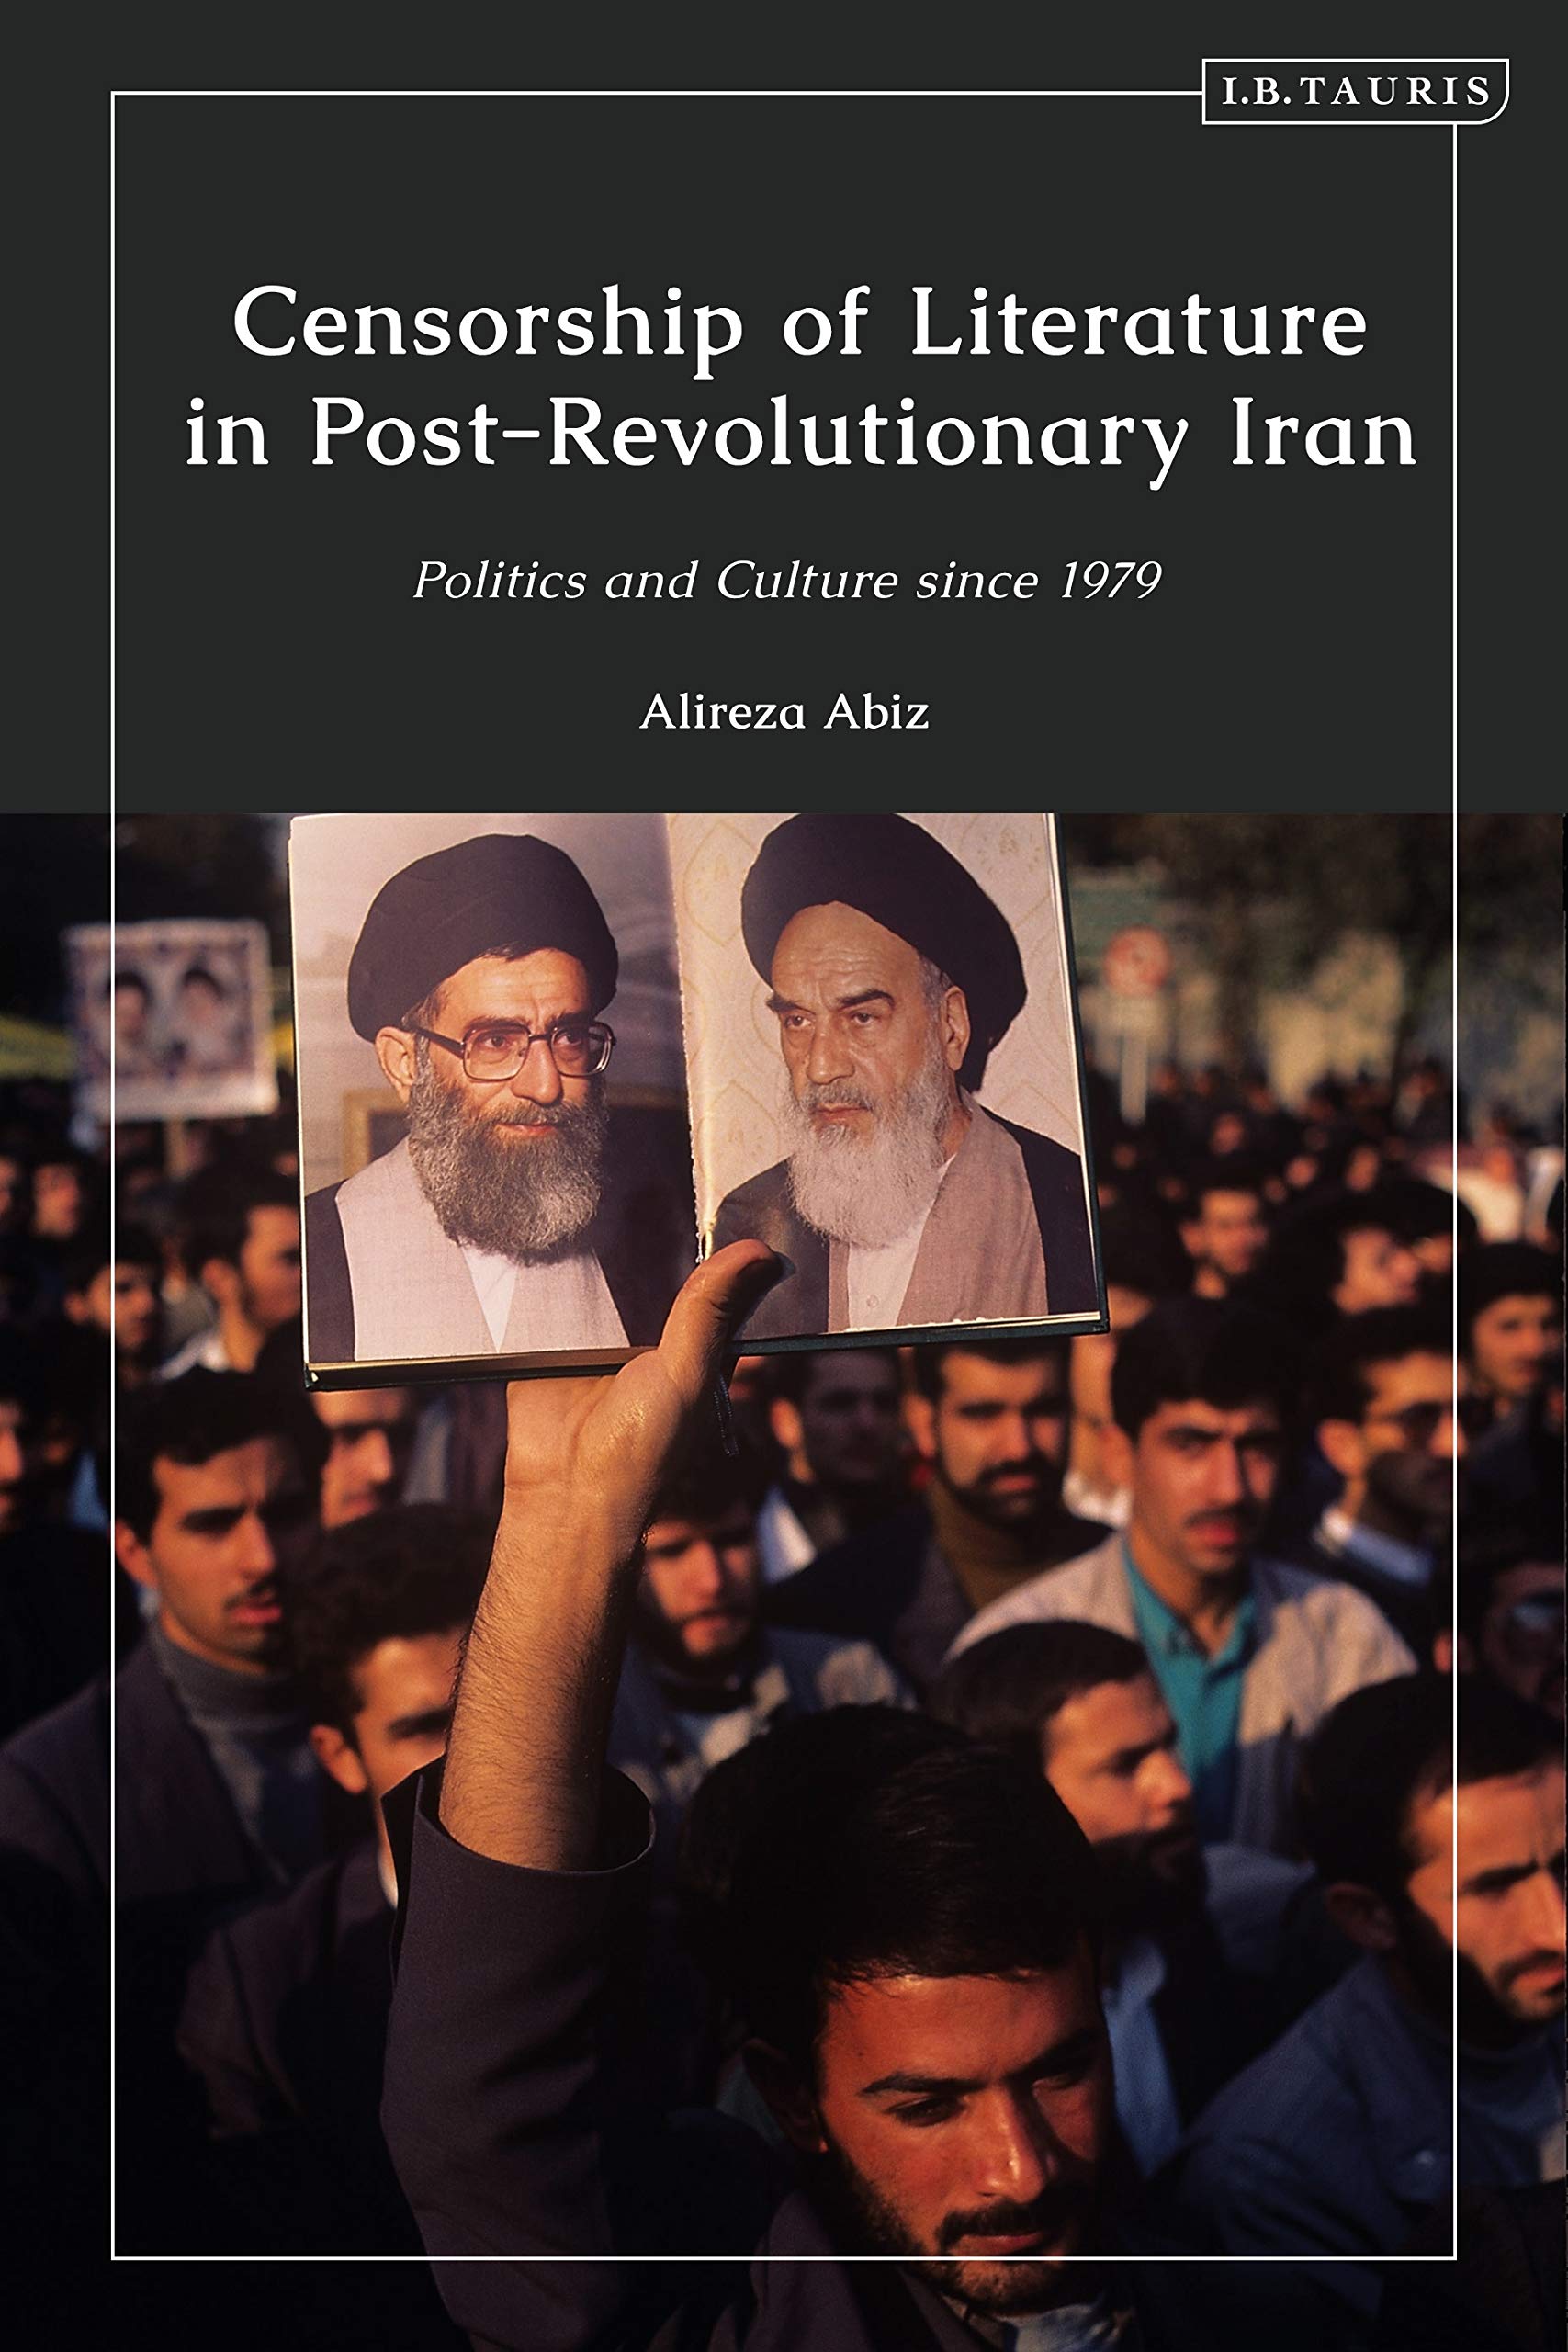 Buchcover. „Censorship of Literature in Post-Revolutionary Iran“; Foto: Verlag I.B.Tauris